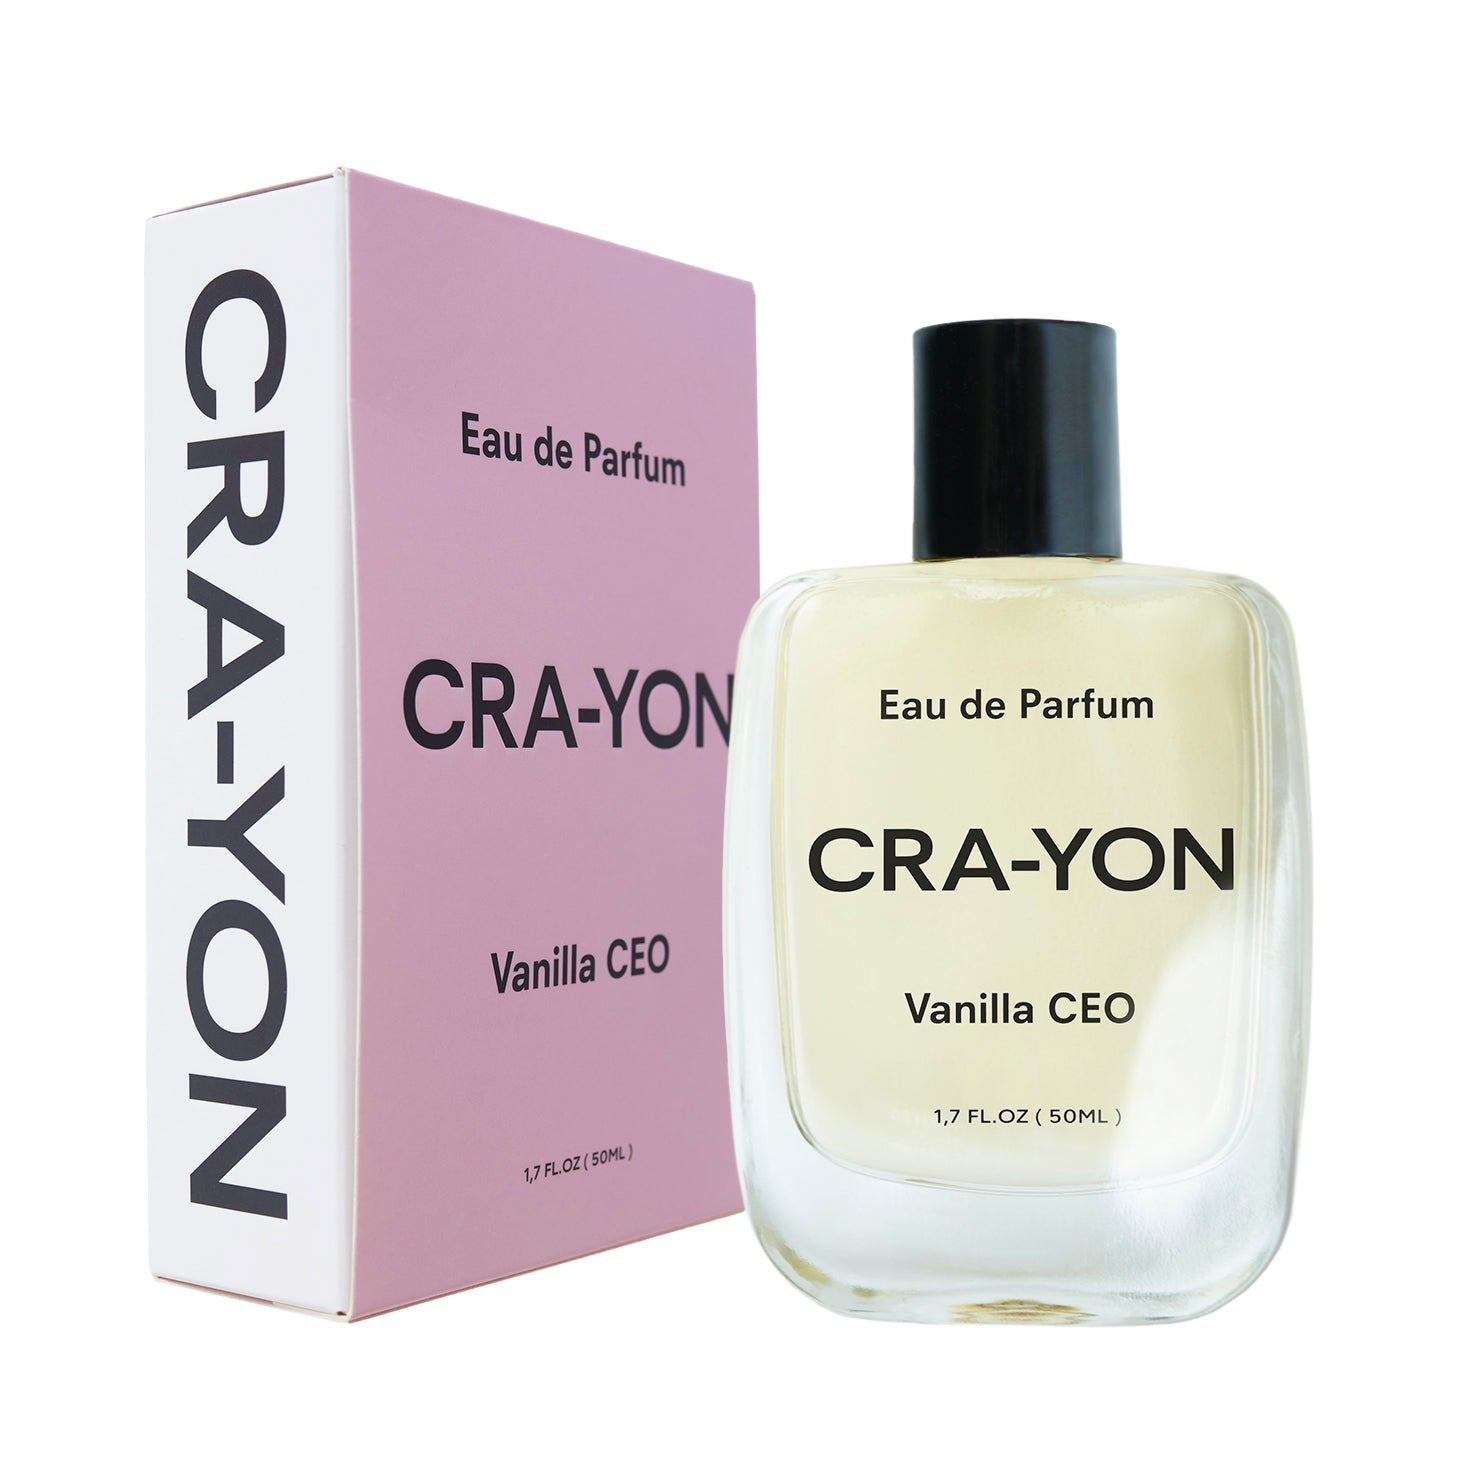 CRA-YON Vanilla CEO Eau de Parfum - 50ml: Official Stockist